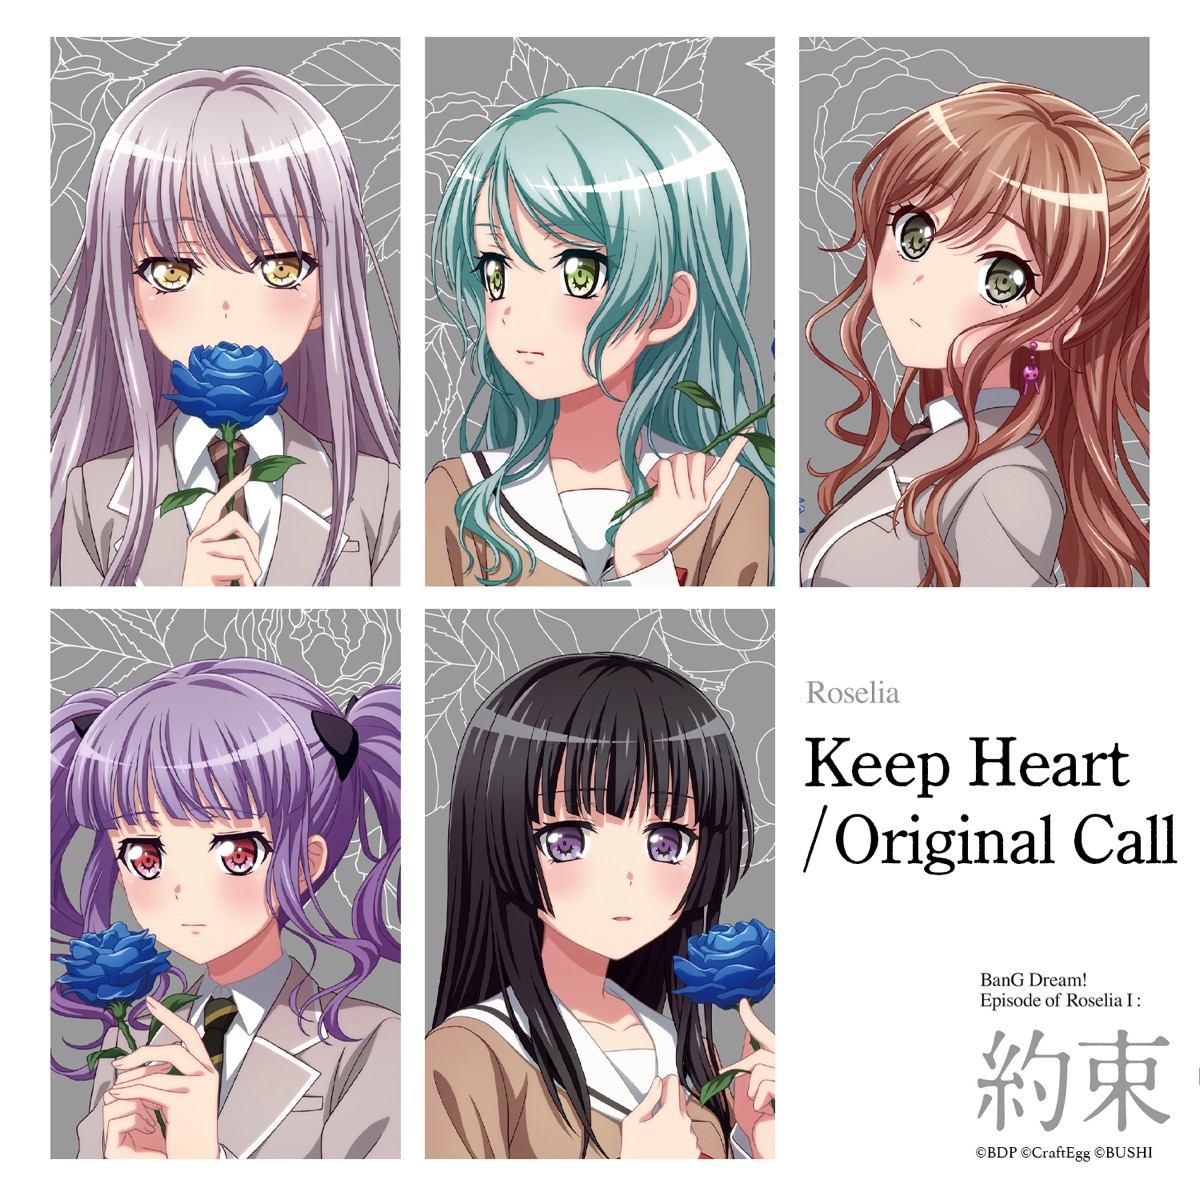 Cover for『Roselia - Original Call』from the release『Keep Heart / Original Call』